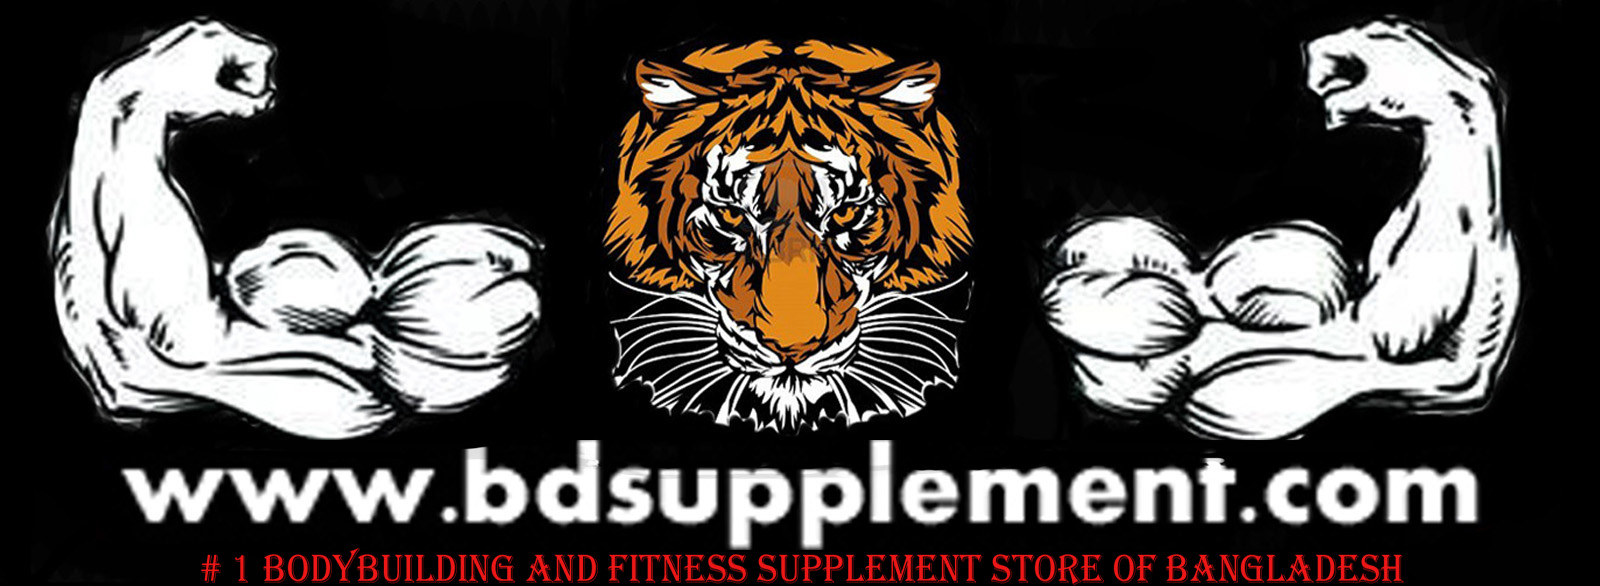 www.bdsupplement.com 1 bodybuilding estore of Bangladesh large image 0